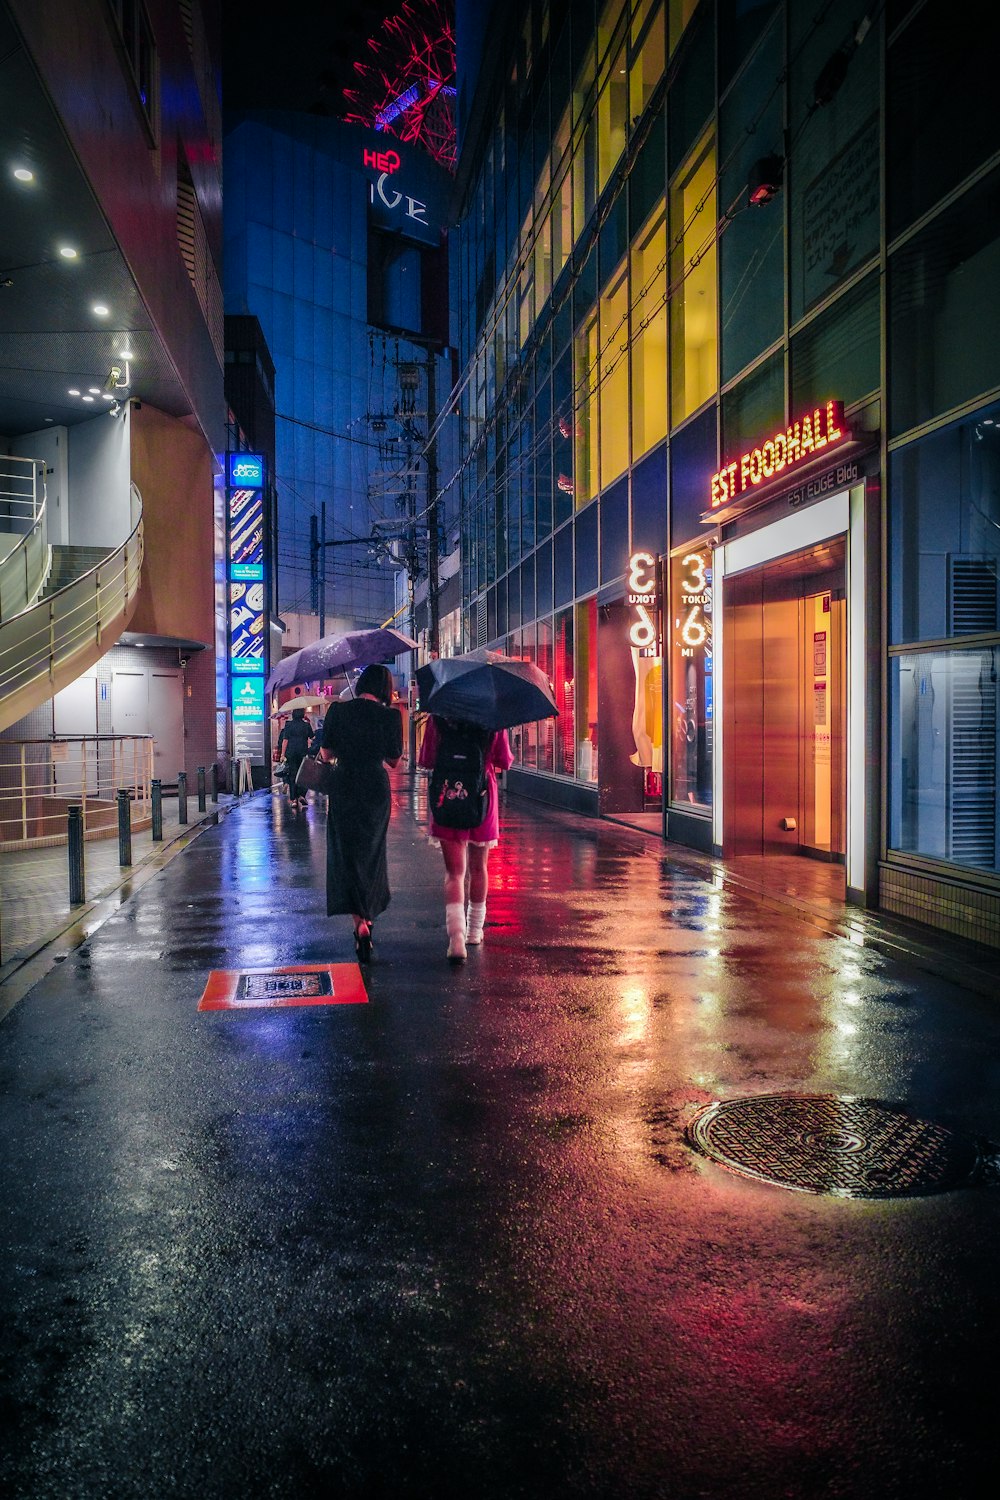 people walking down a sidewalk with umbrellas